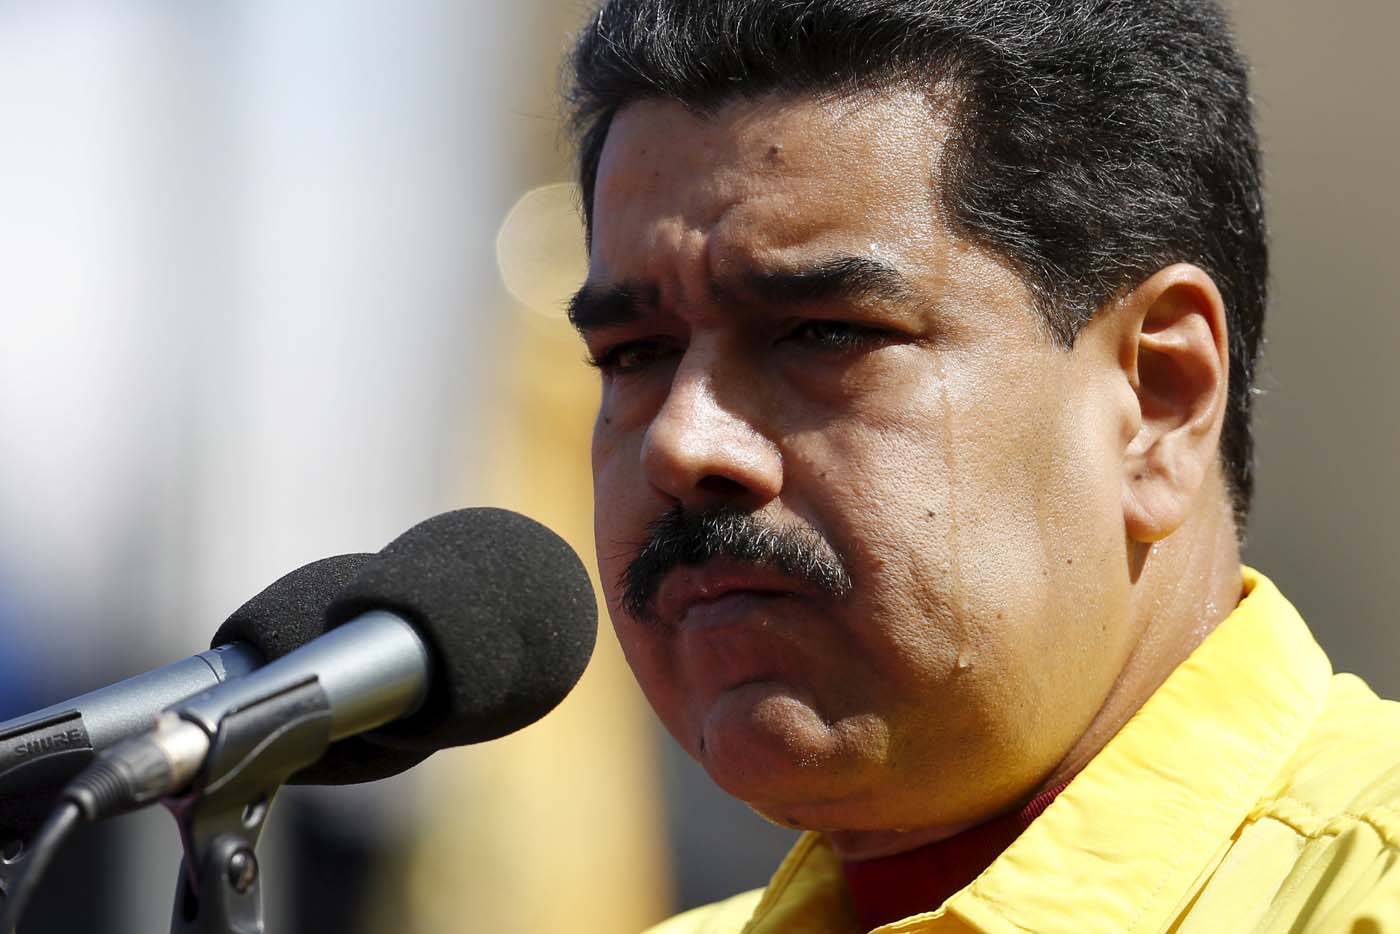 Maduro ordena a la Fiscal investigar a venezolanos involucrados en escándalo de Panamá Papers (Video)